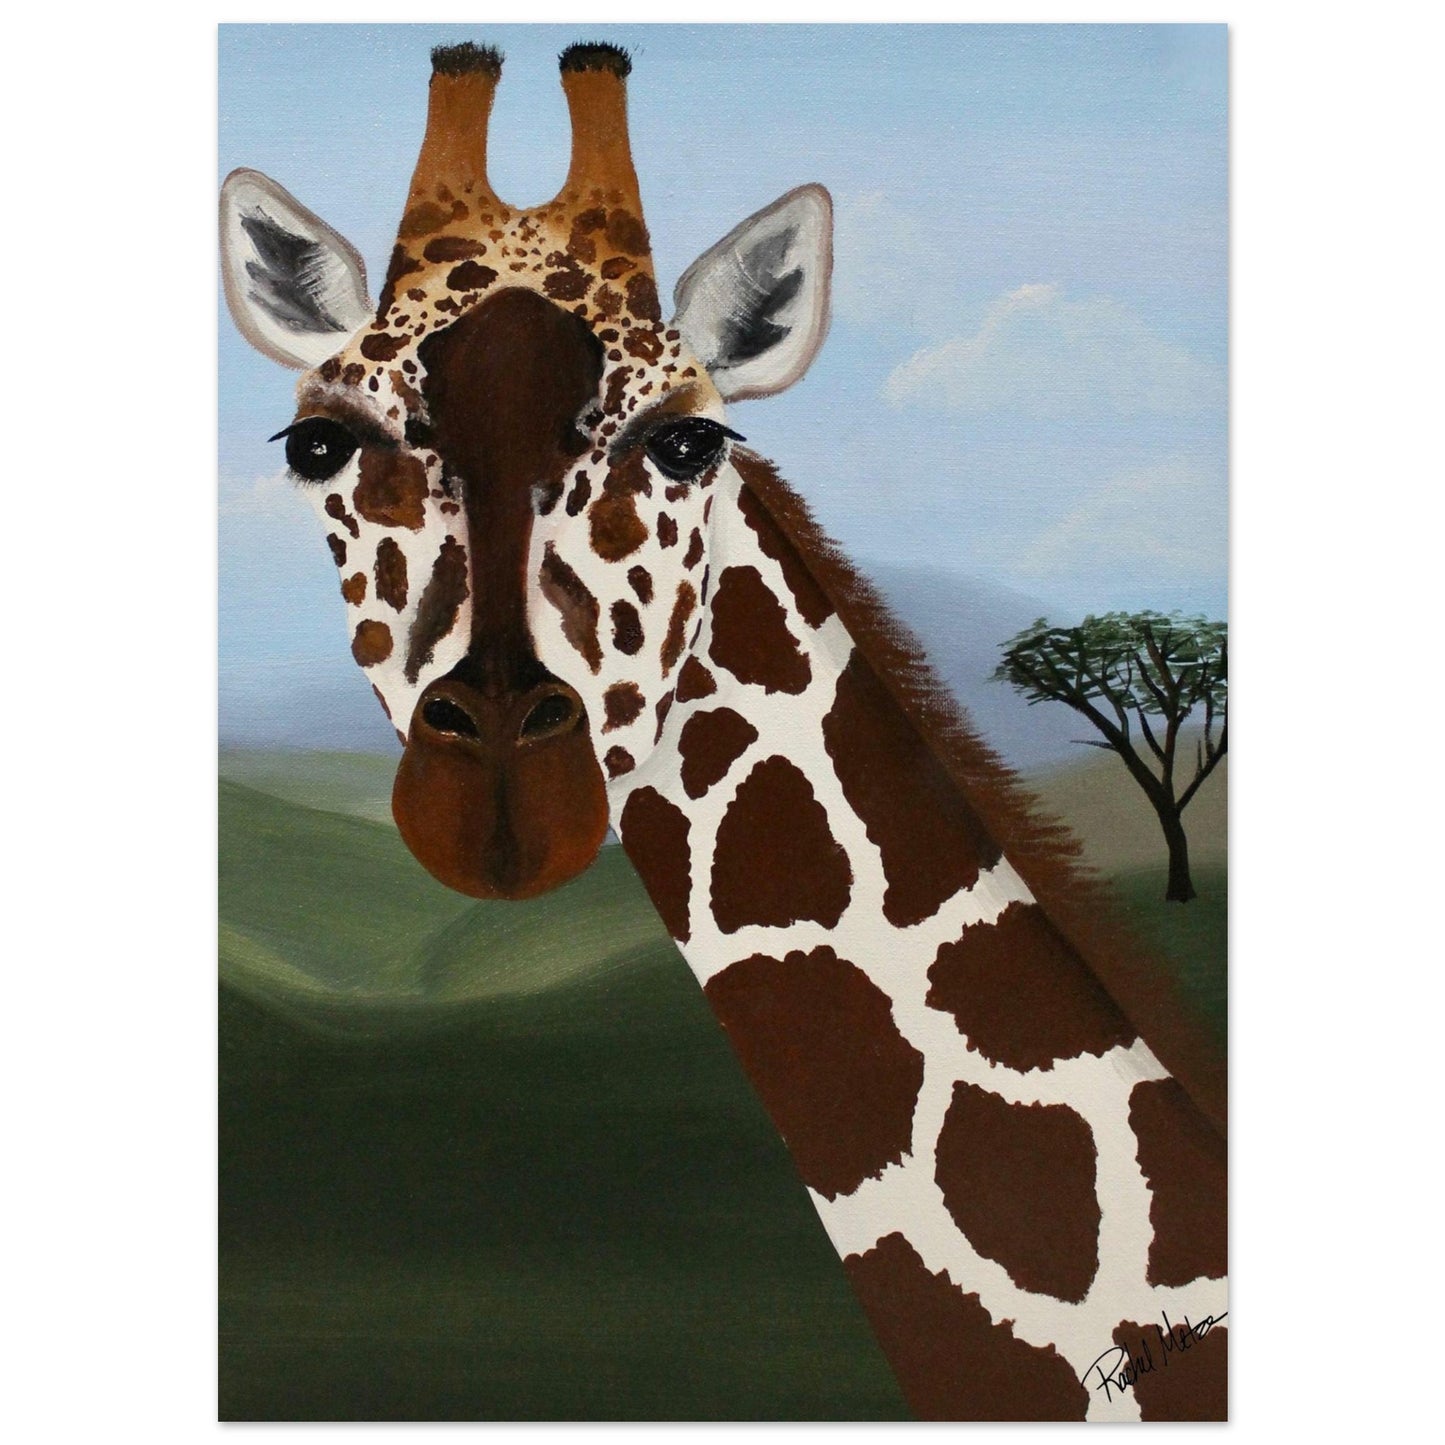 Reticulated Giraffe Wall Art Print on Premium Matte Paper Poster - Multiple Sizes